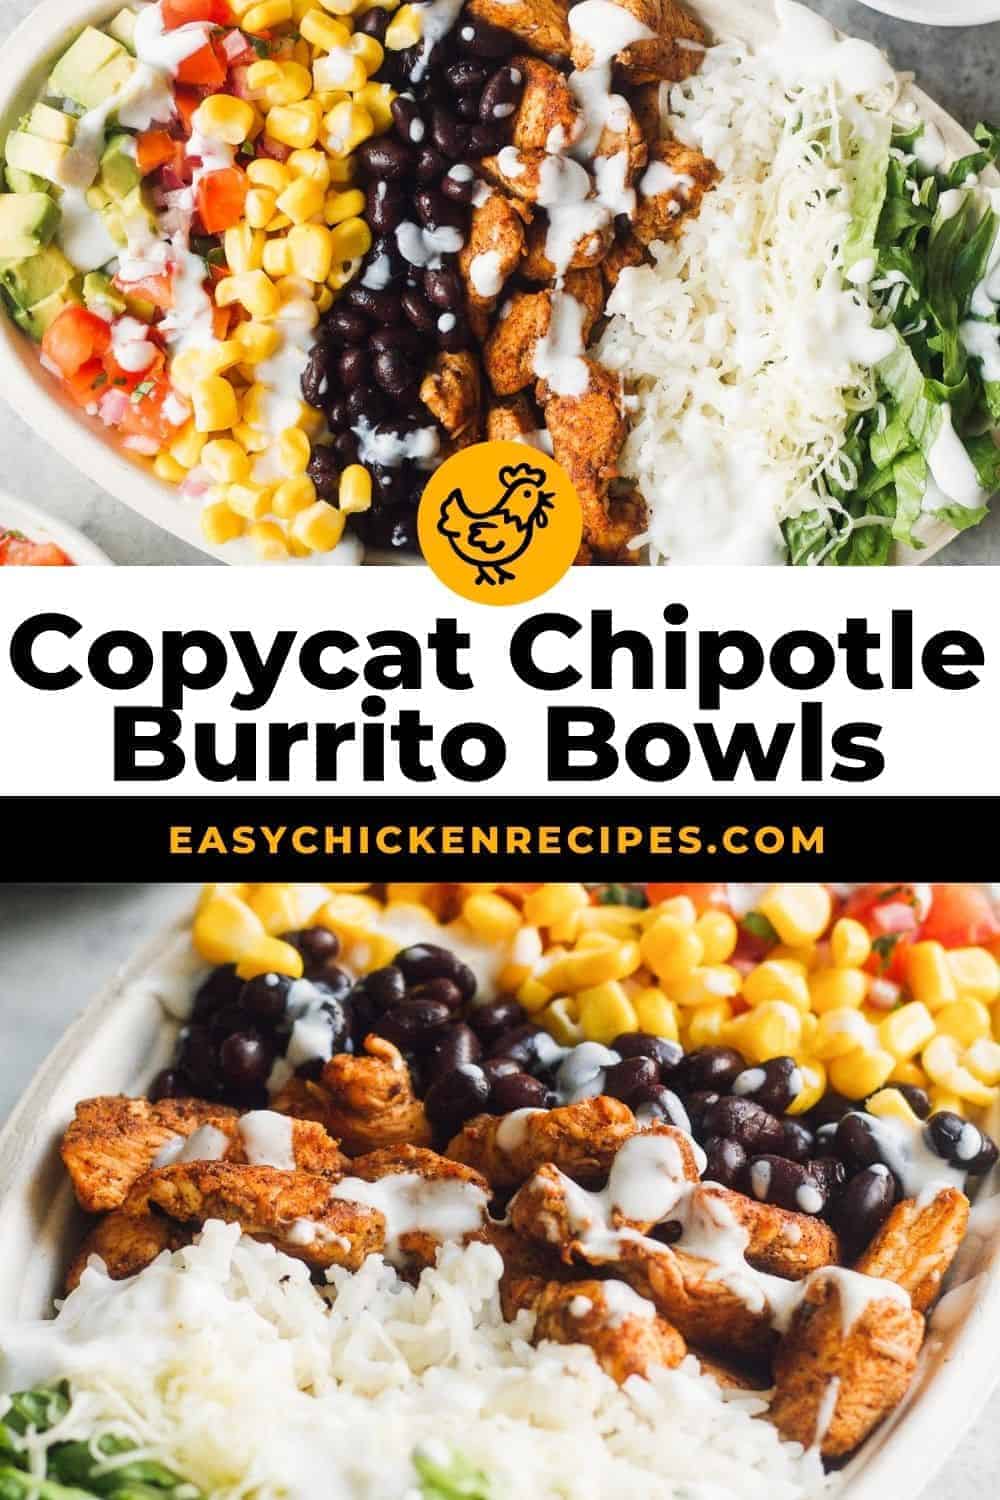 Chicken Burrito Bowl Recipe (Chipotle Copycat) - Easy Chicken Recipes ...